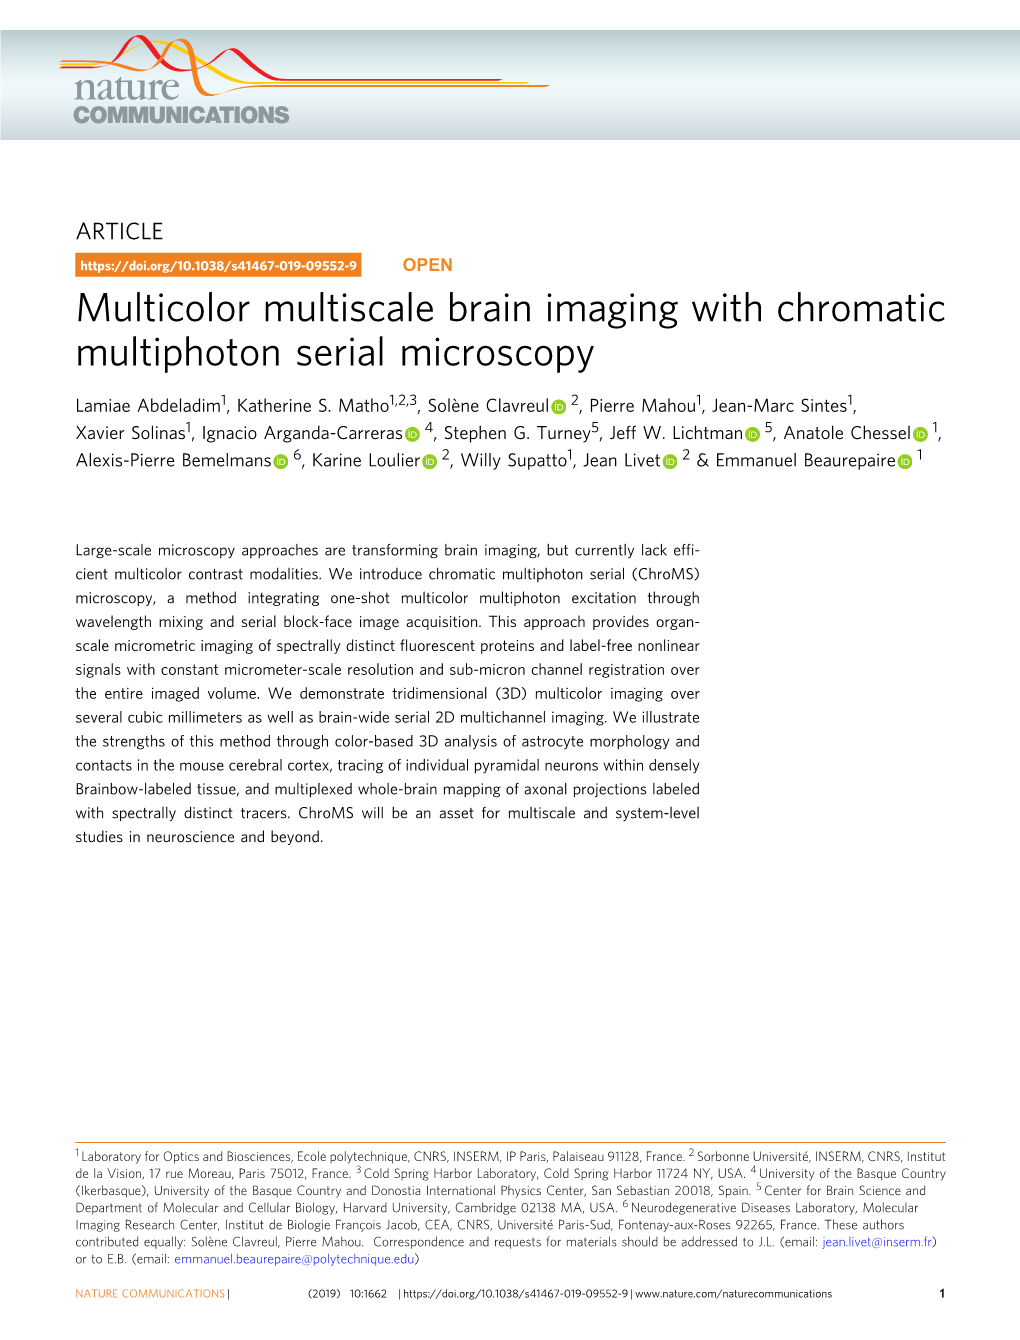 Multicolor Multiscale Brain Imaging with Chromatic Multiphoton Serial Microscopy